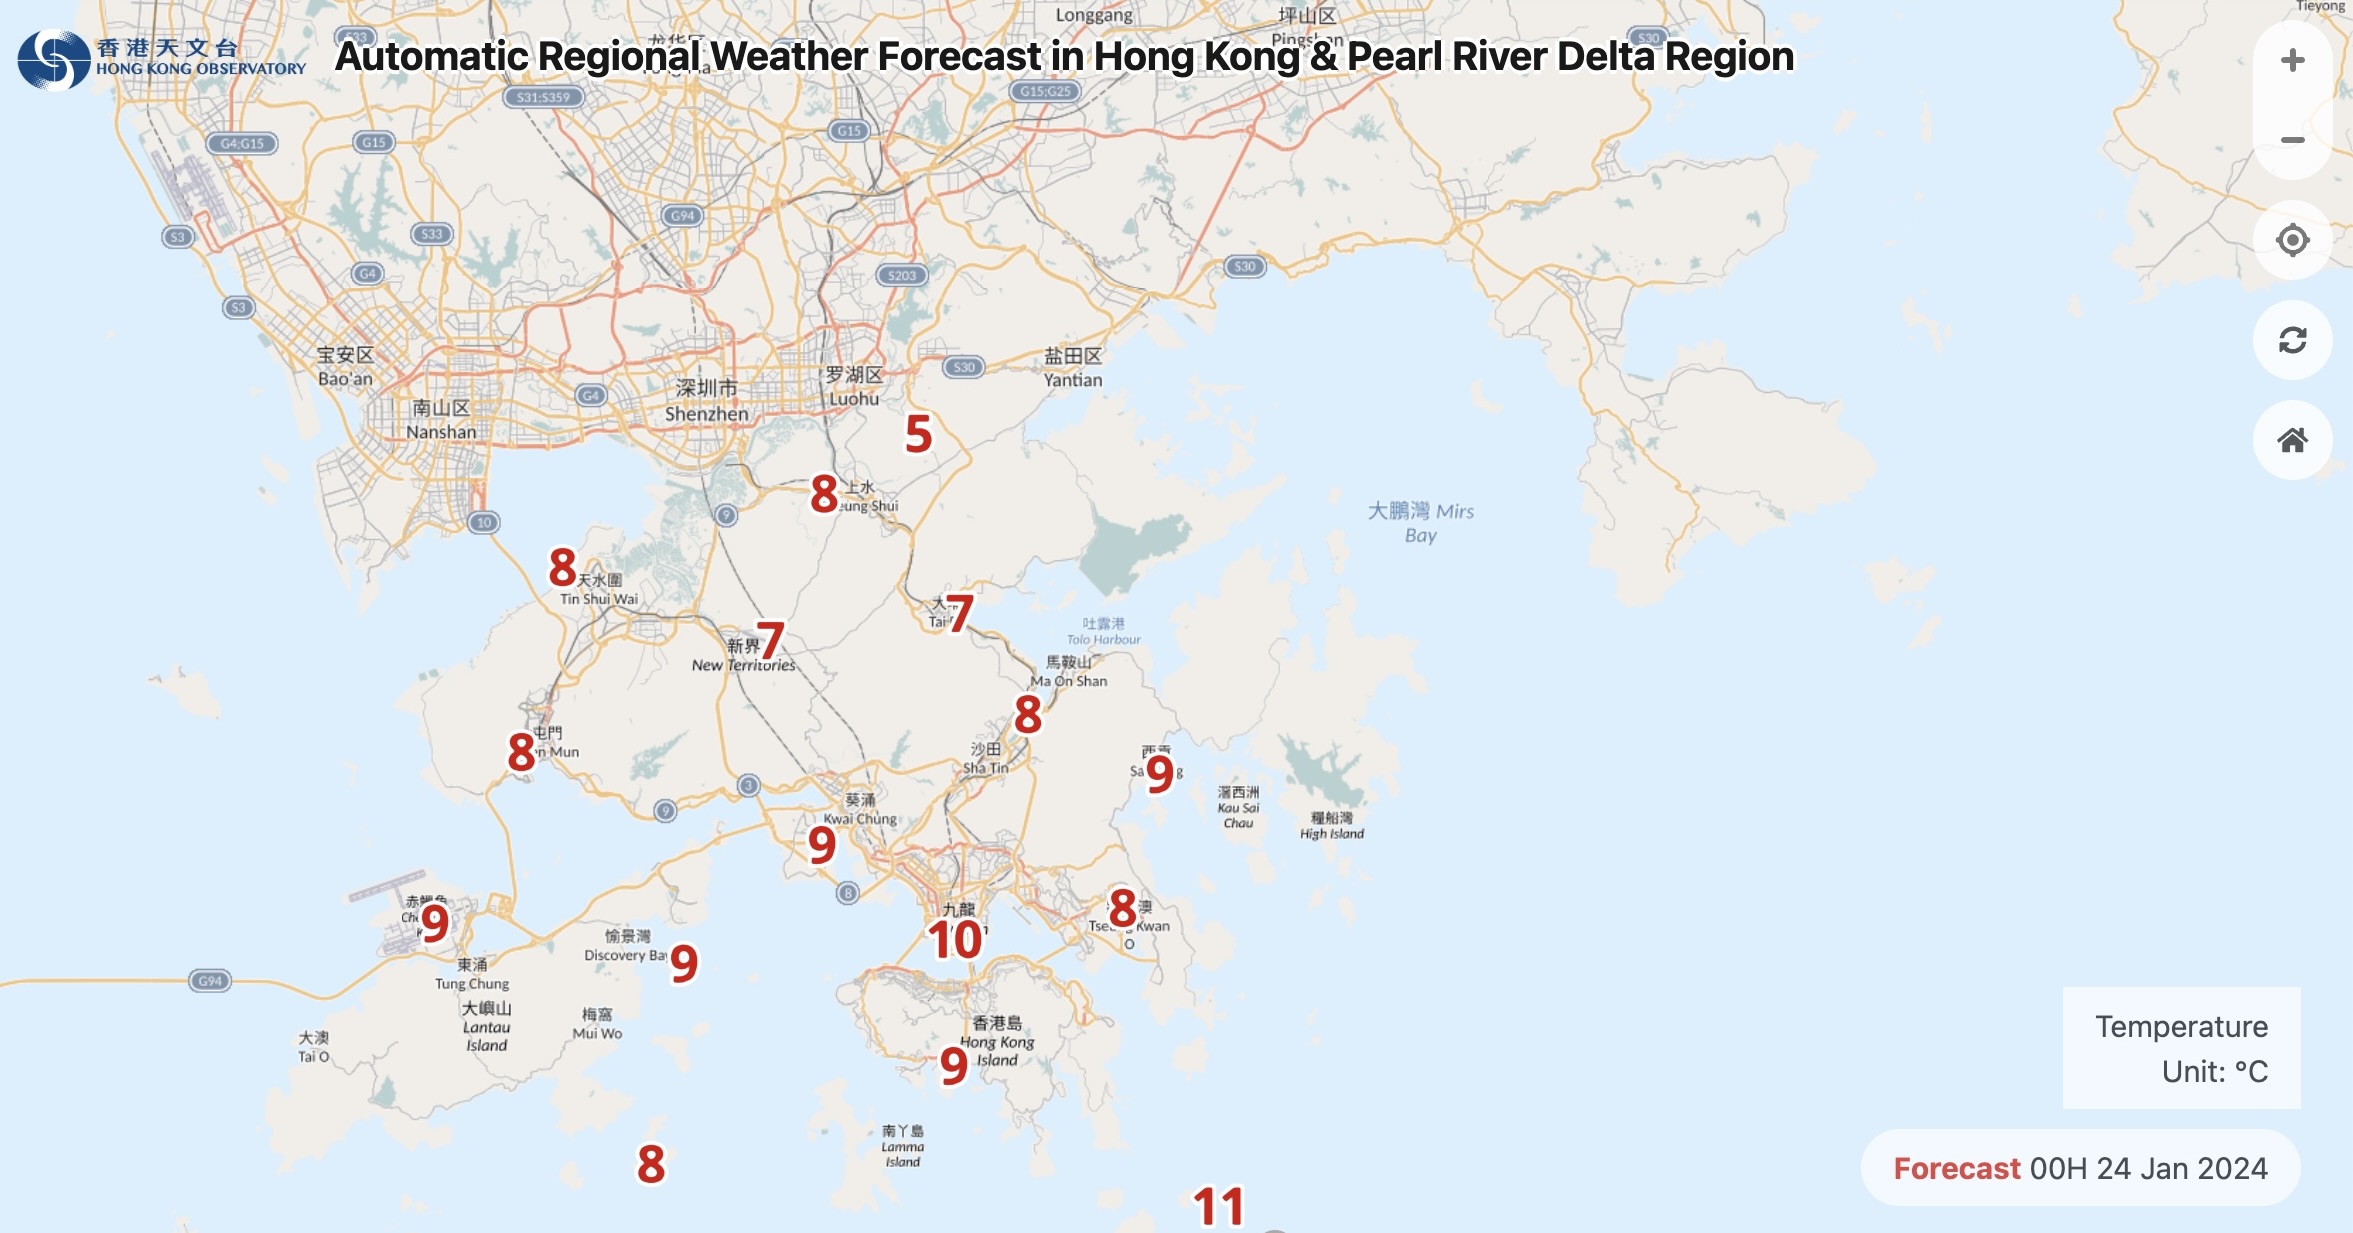 hong kong observatory temperature predictions for january 24, 2024